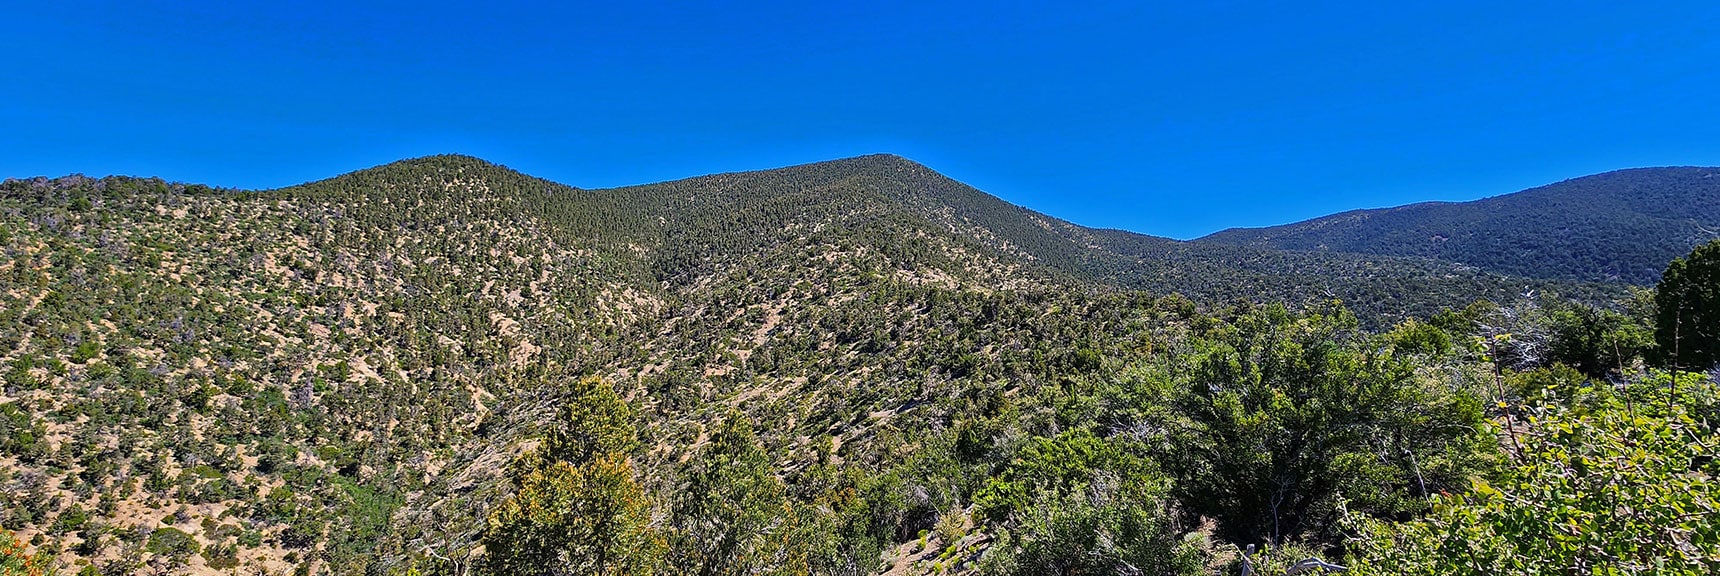 Final Approach to Wilson Ridge South High Point | Wilson Ridge Lovell Canyon Loop | Lovell Canyon, Nevada